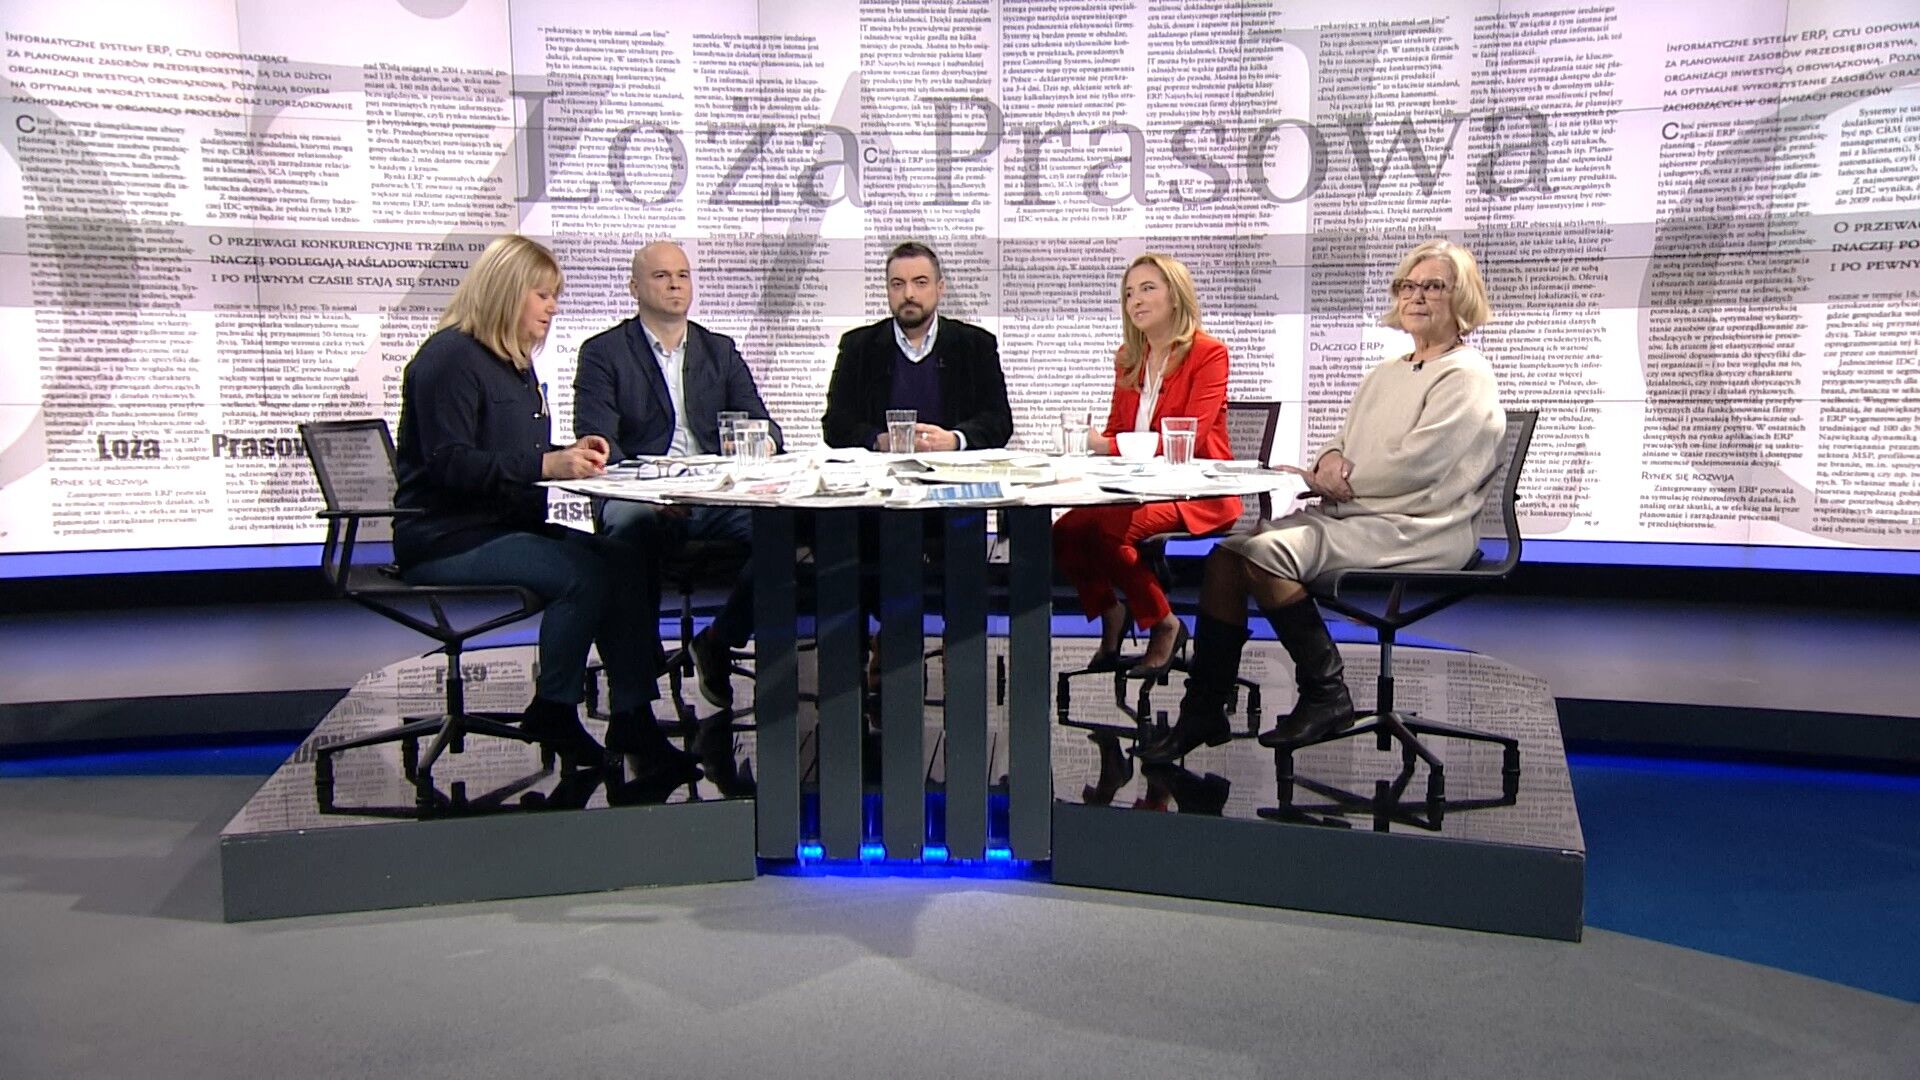 Jacek Prusinowski, Joanna Solska, Dominika Wielowieyska, Tomasz Sekielski 